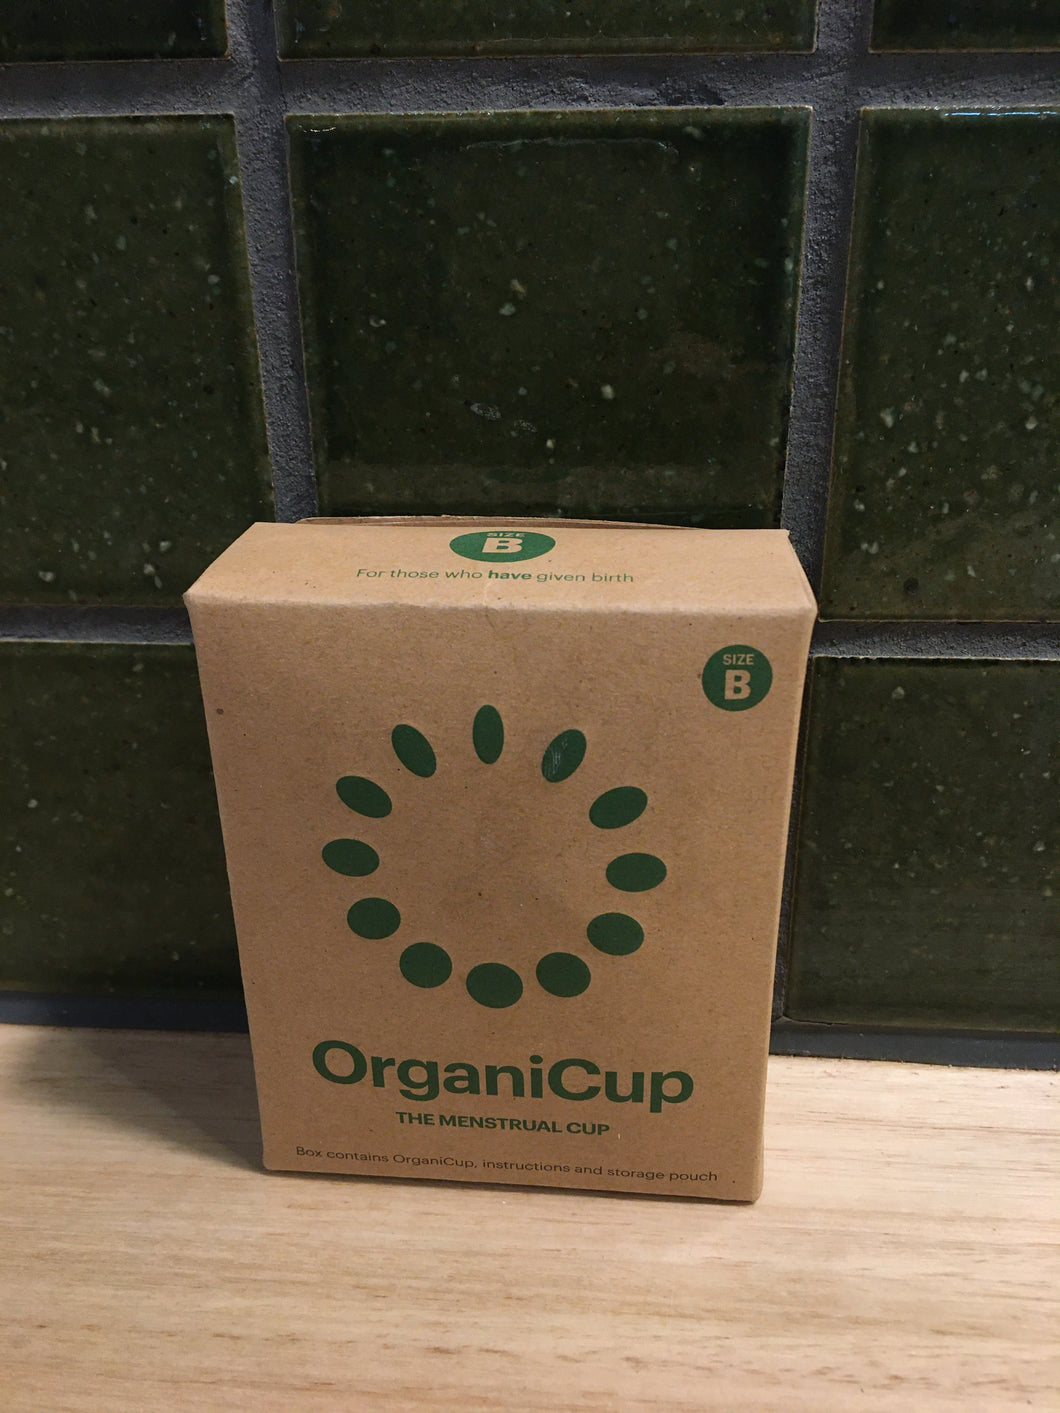 OrganiCup Menstrual Cup Size B